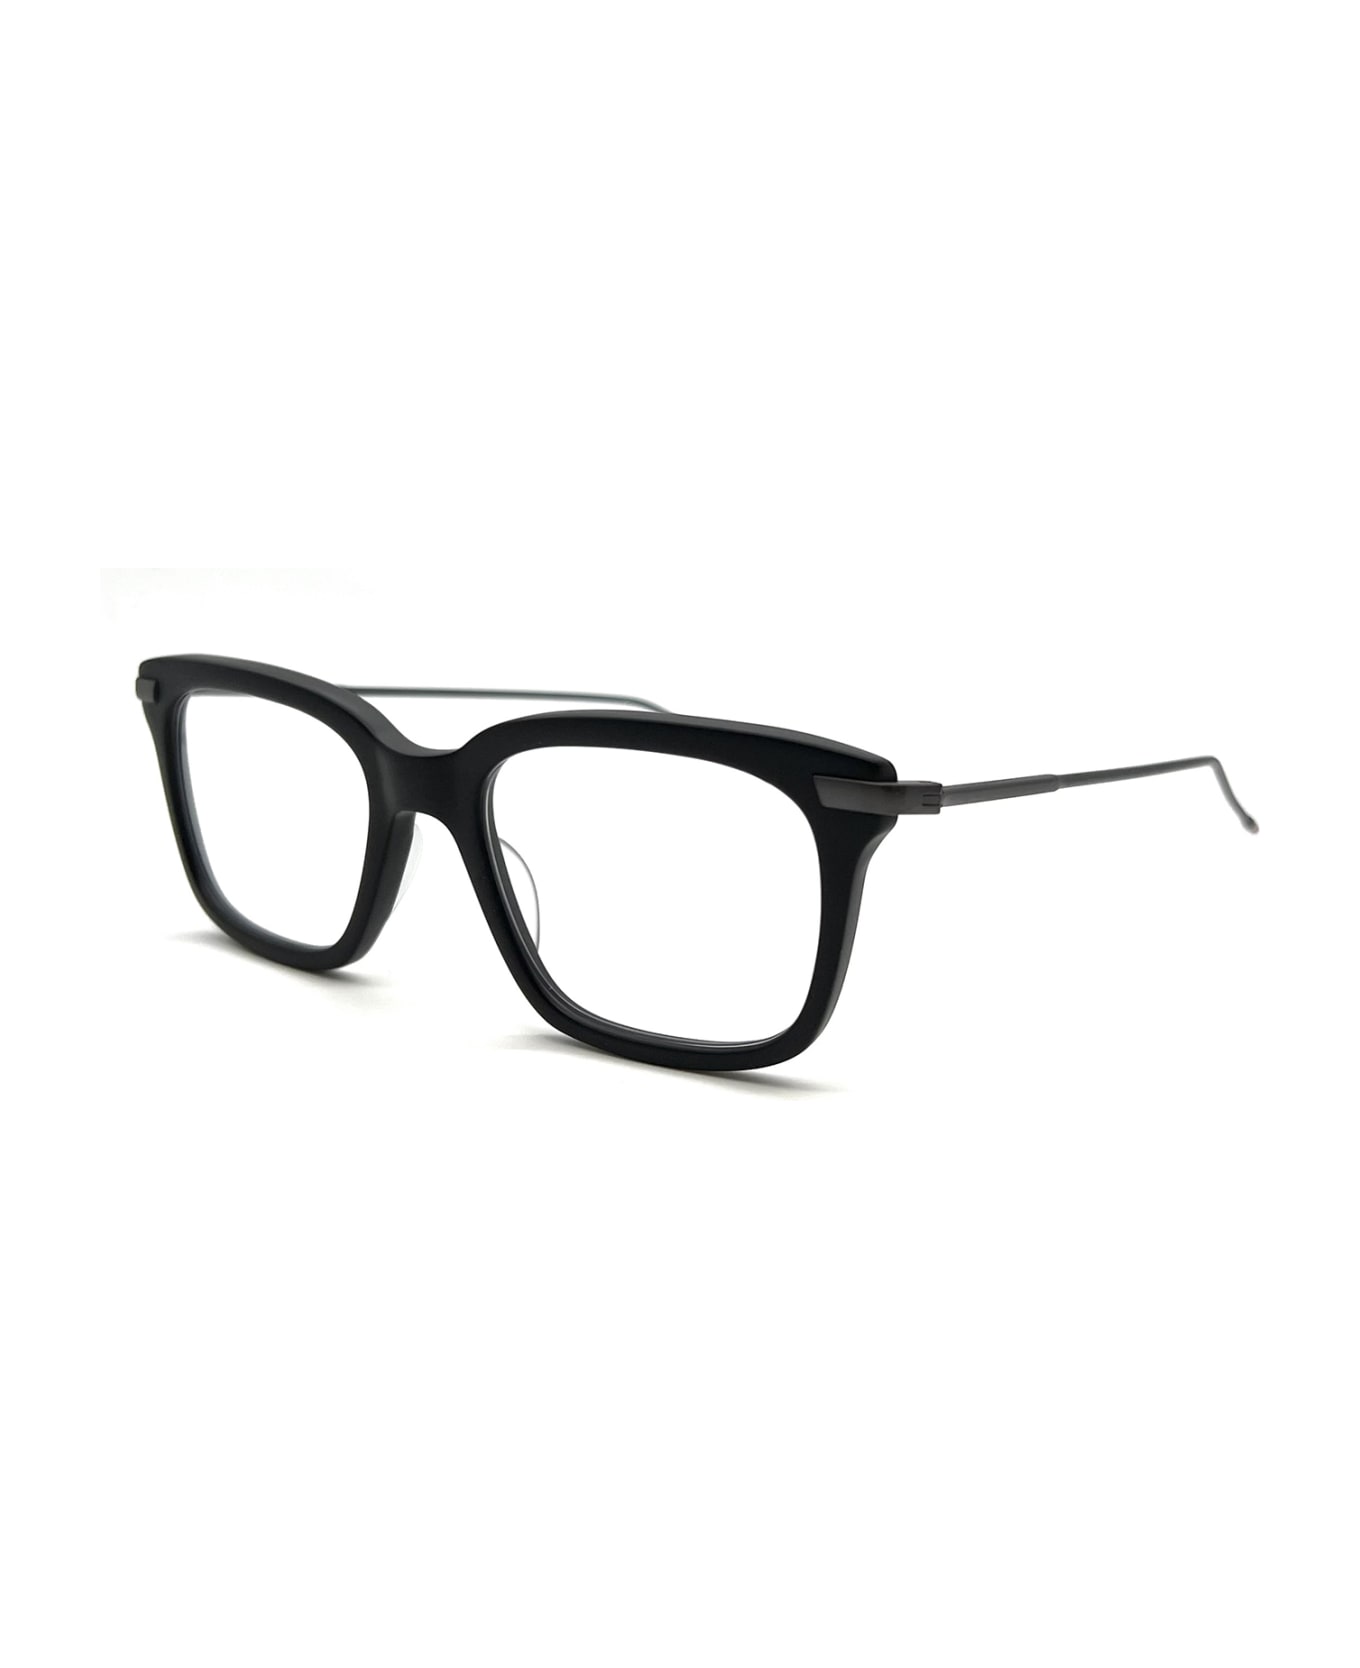 Thom Browne UEO701A/G0003 Eyewear - Black/charcoal アイウェア